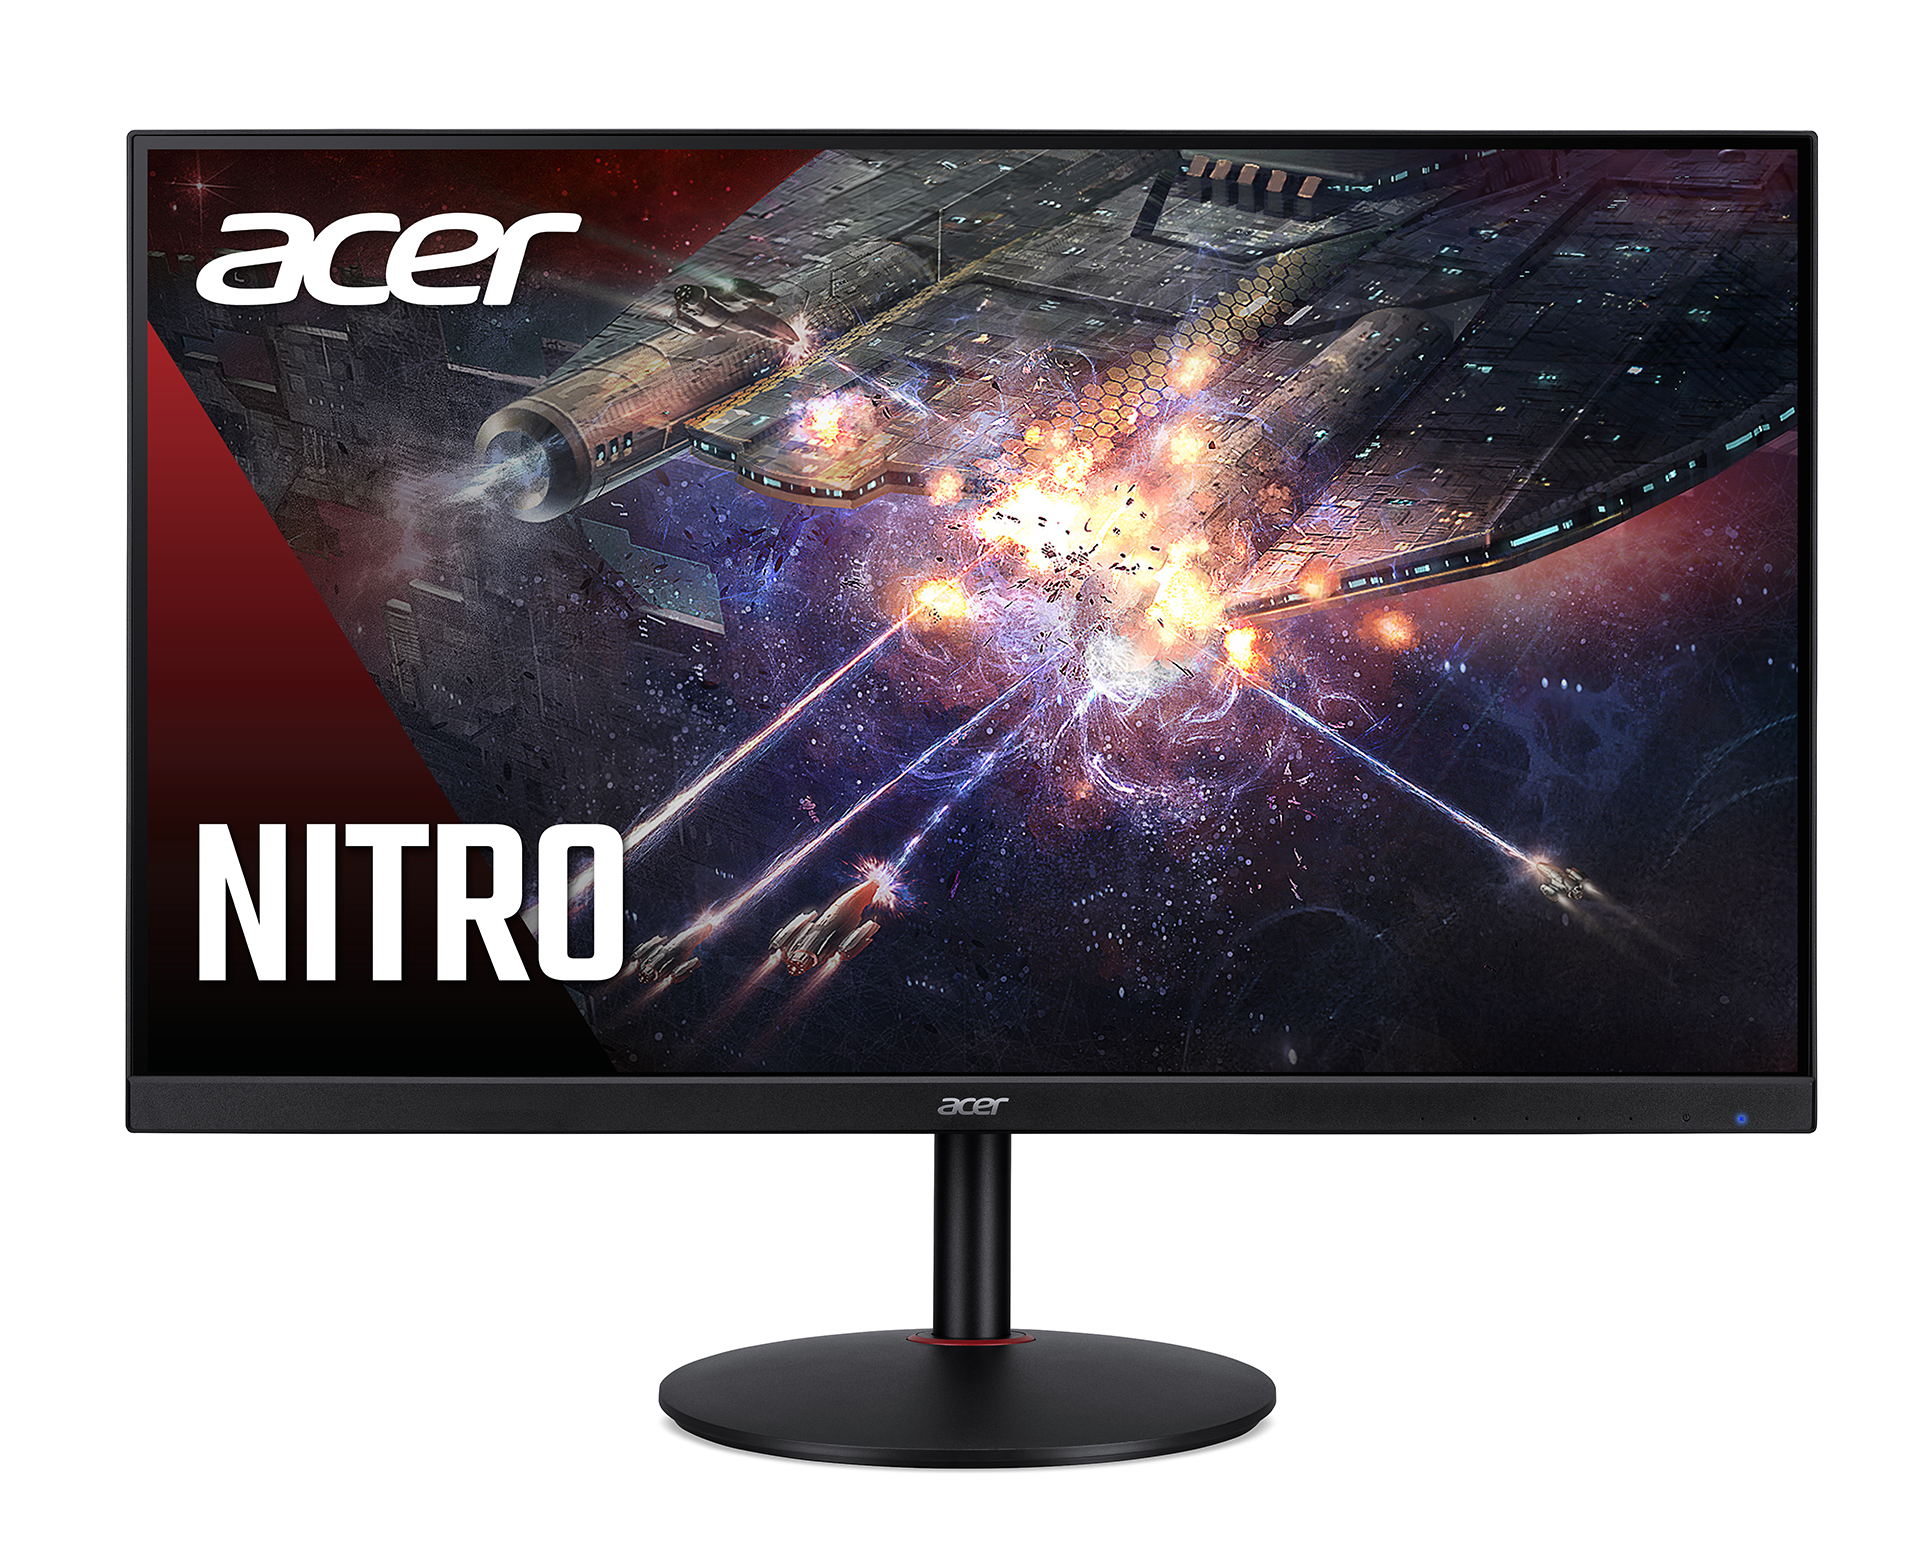 Acer Nitro 31.5" 1440p 144Hz Gaming Monitor - $249.99 Newegg